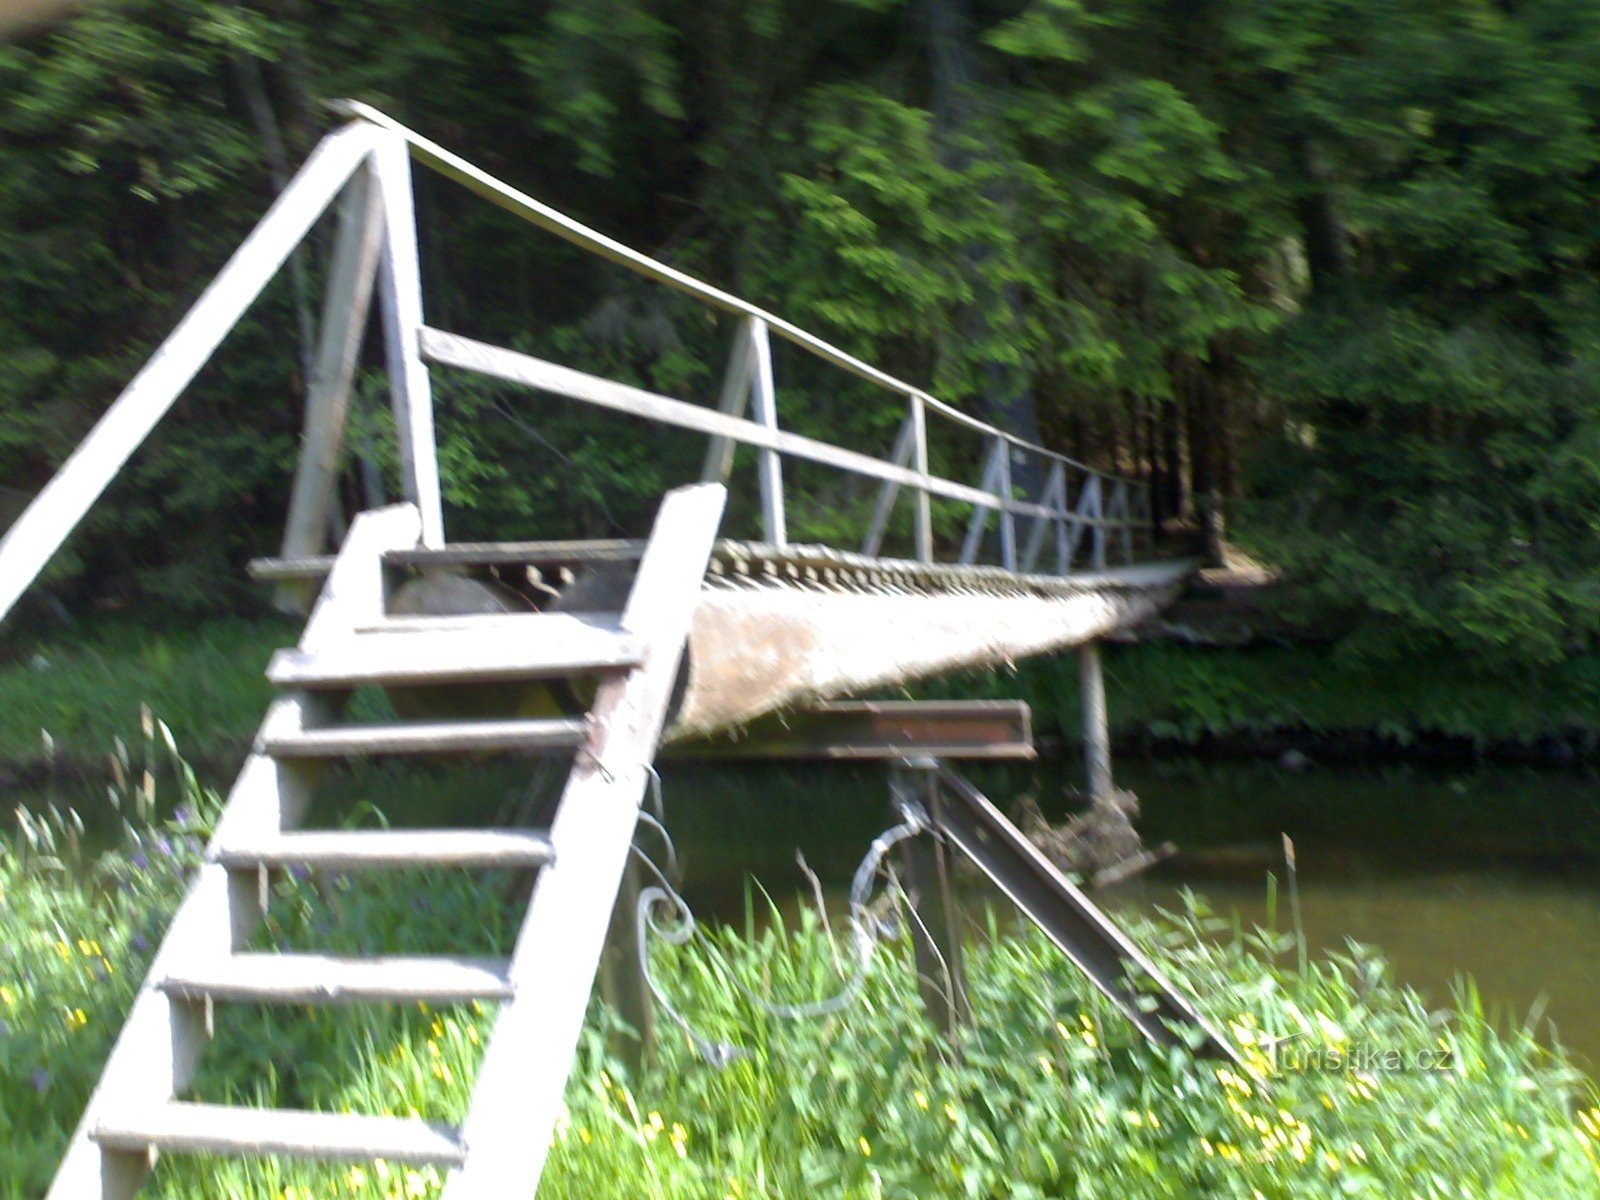 Footbridge over Chrudimka